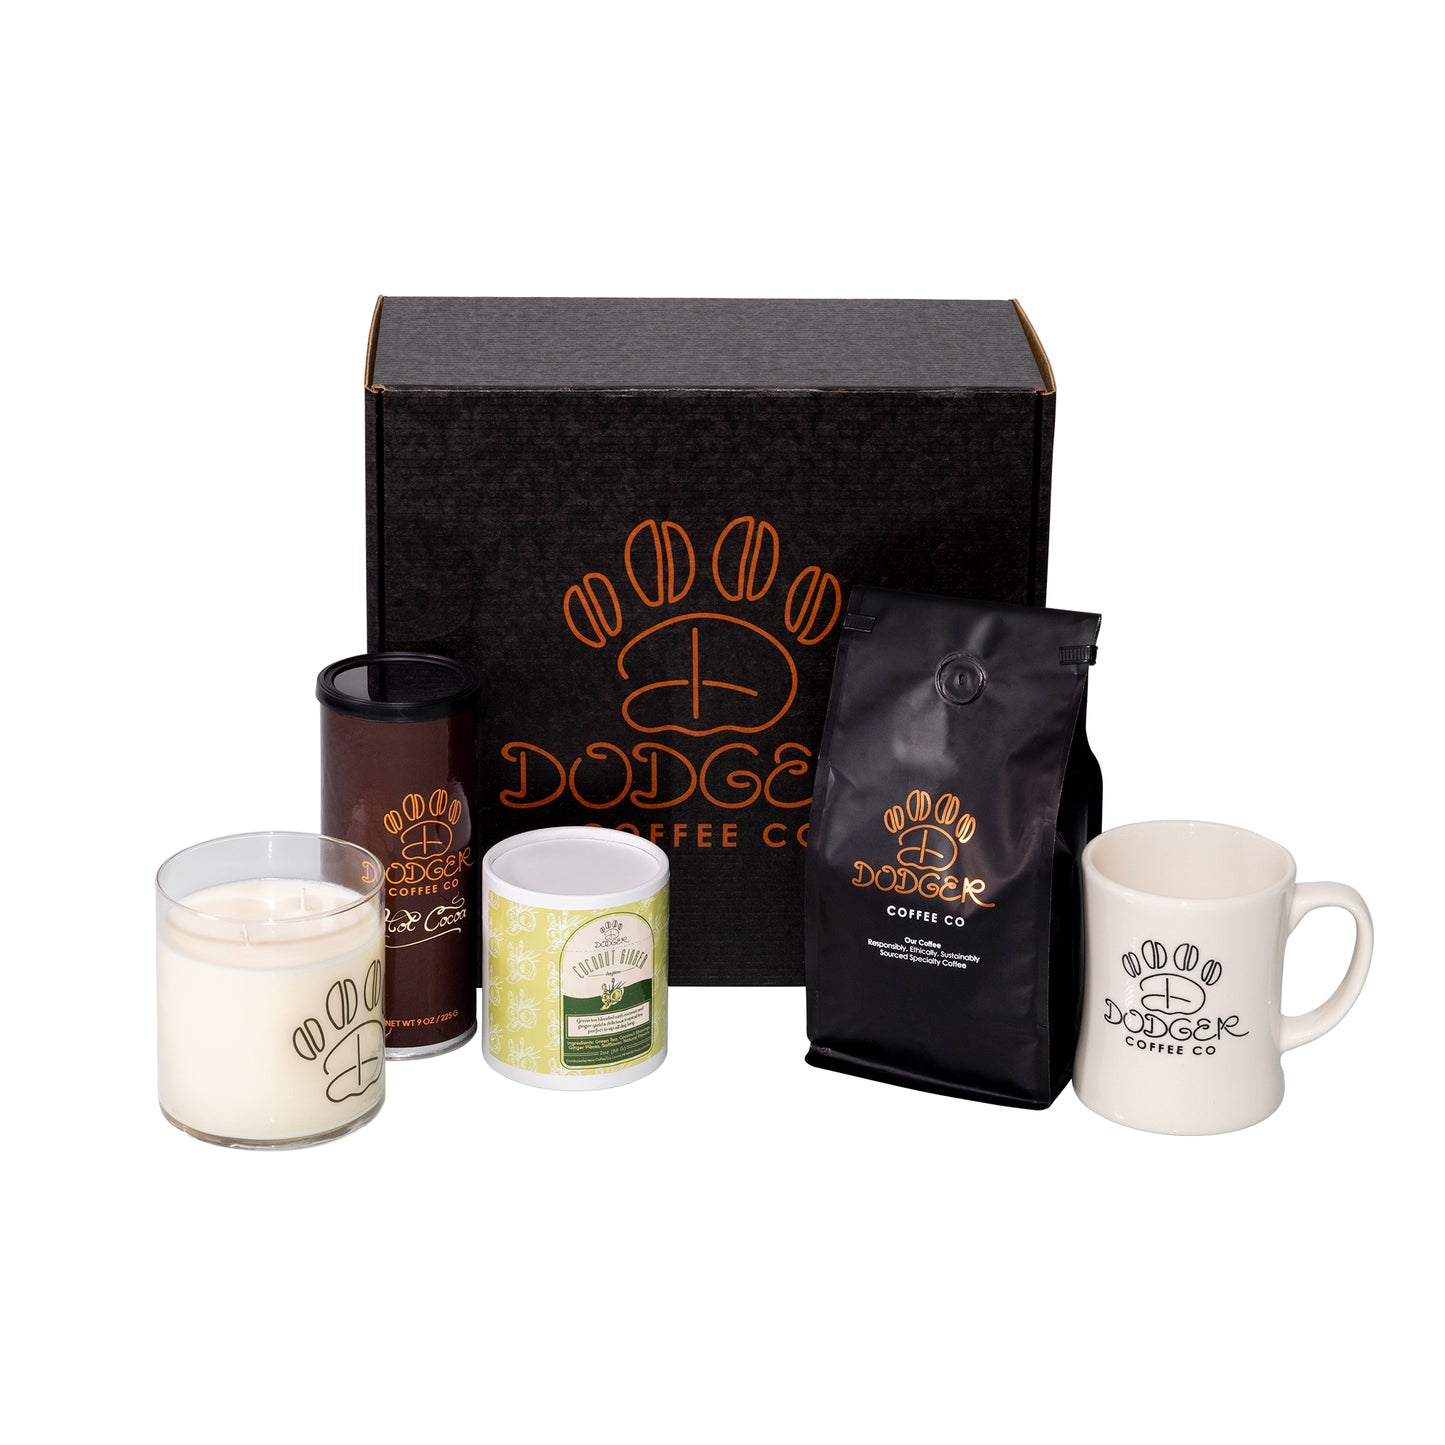 Dodger Bundle Products, including cinnamon candle, hot cocoa, green tea, mug, coffee